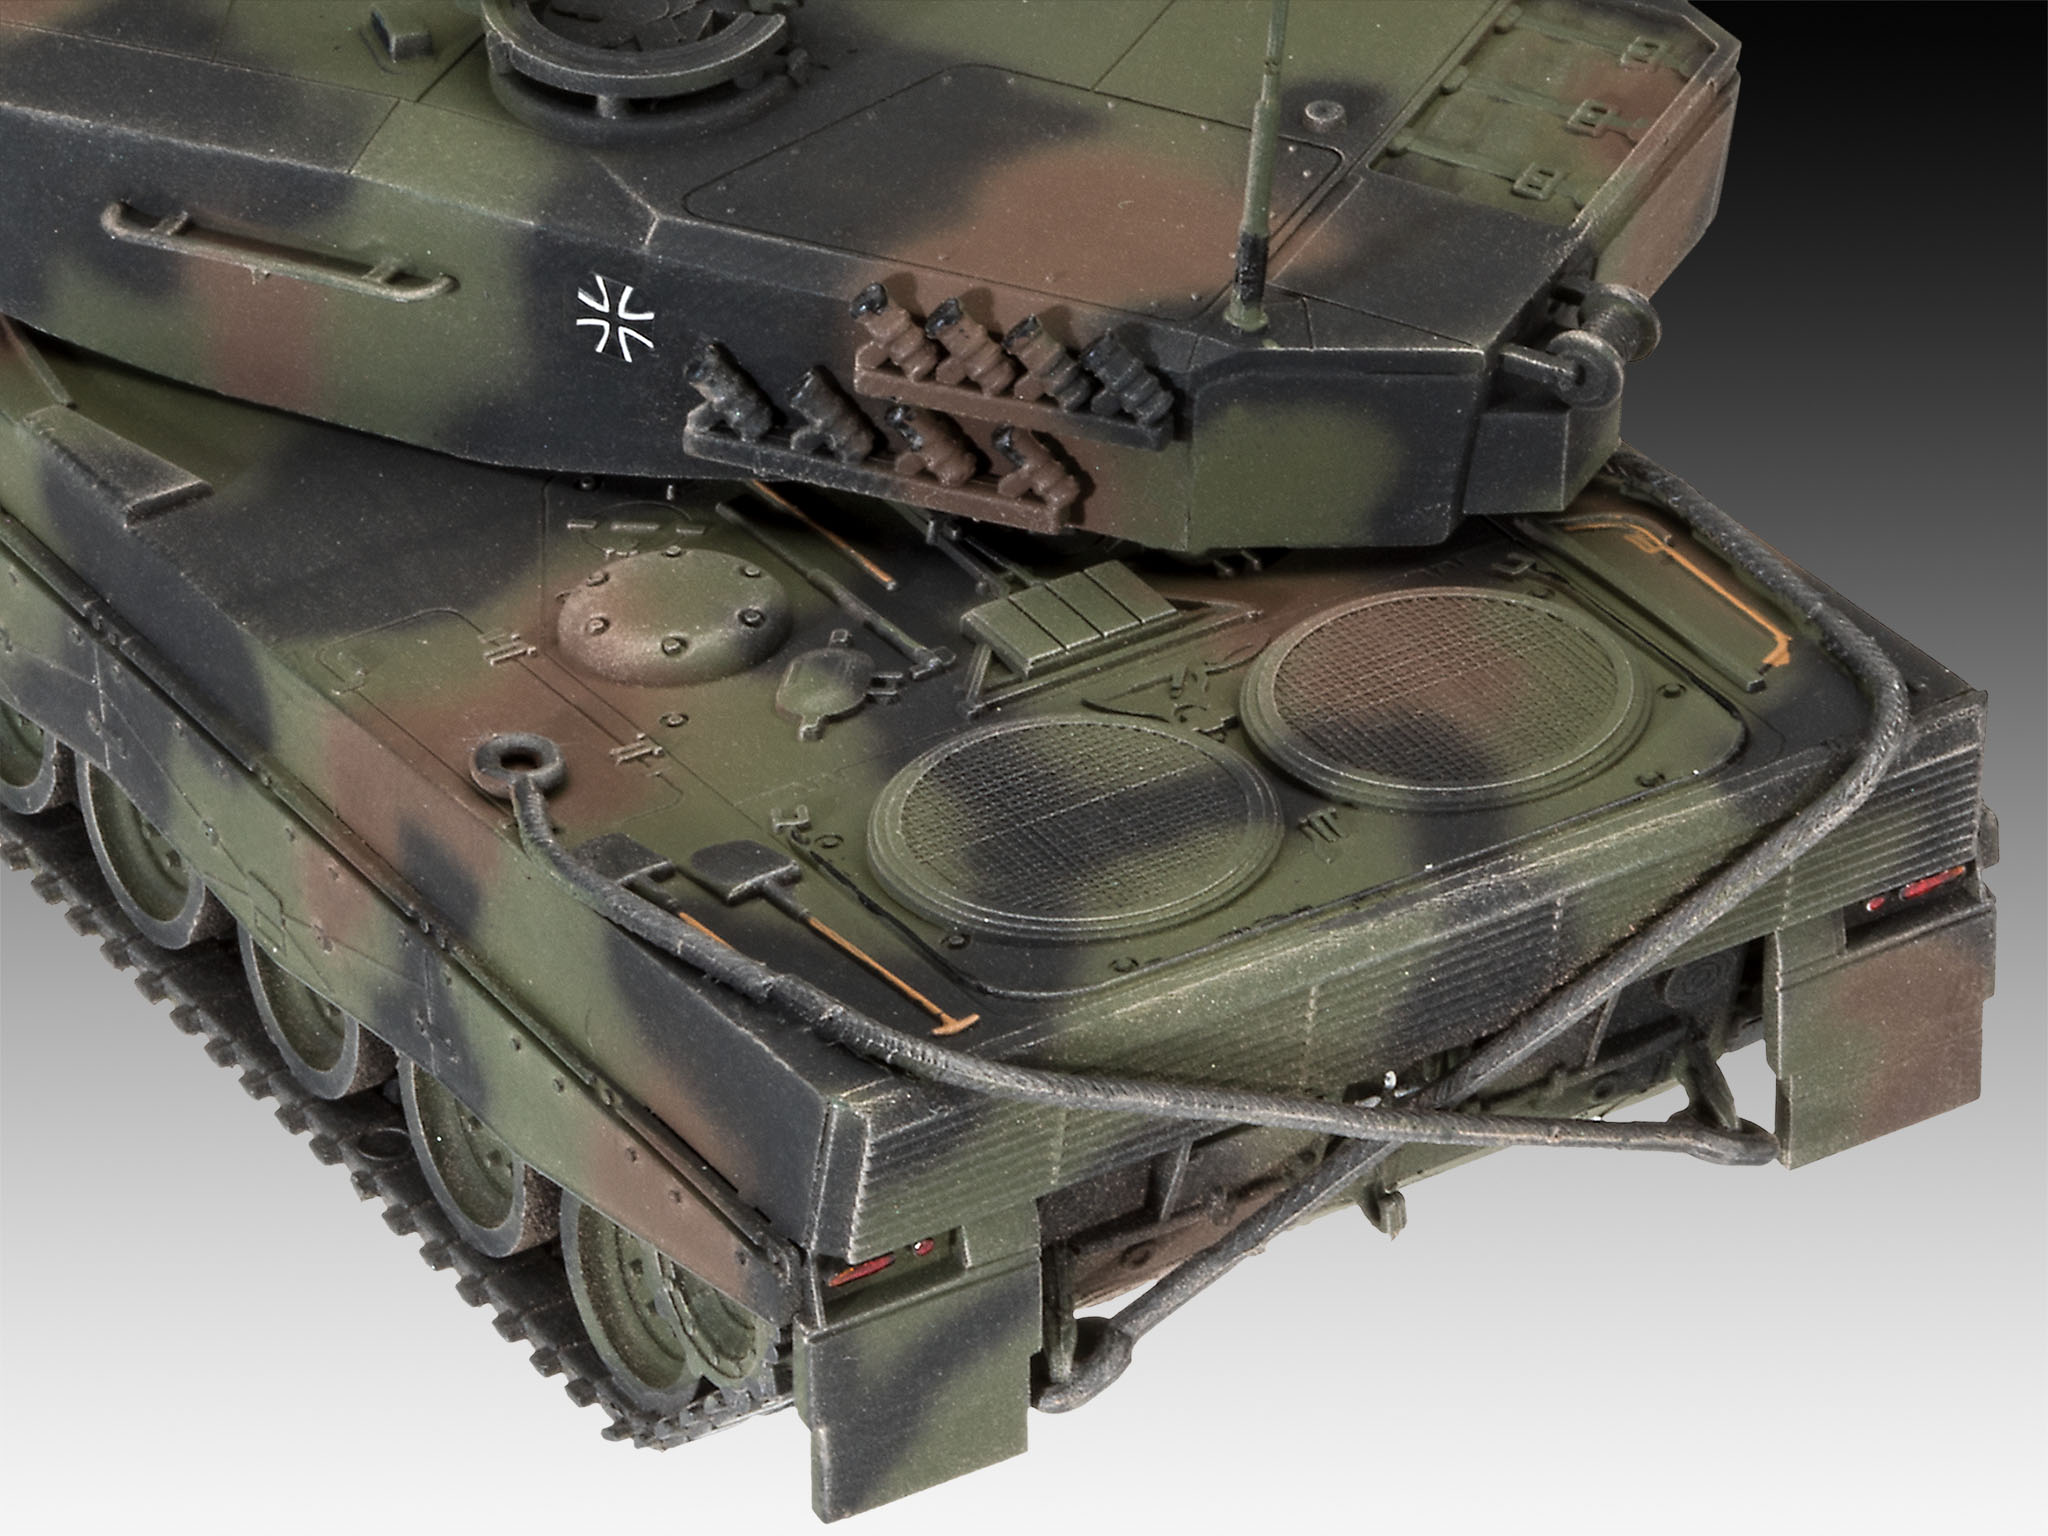 Mehrfarbig Leopard 2A4 50-3 Panzer, + REVELL \